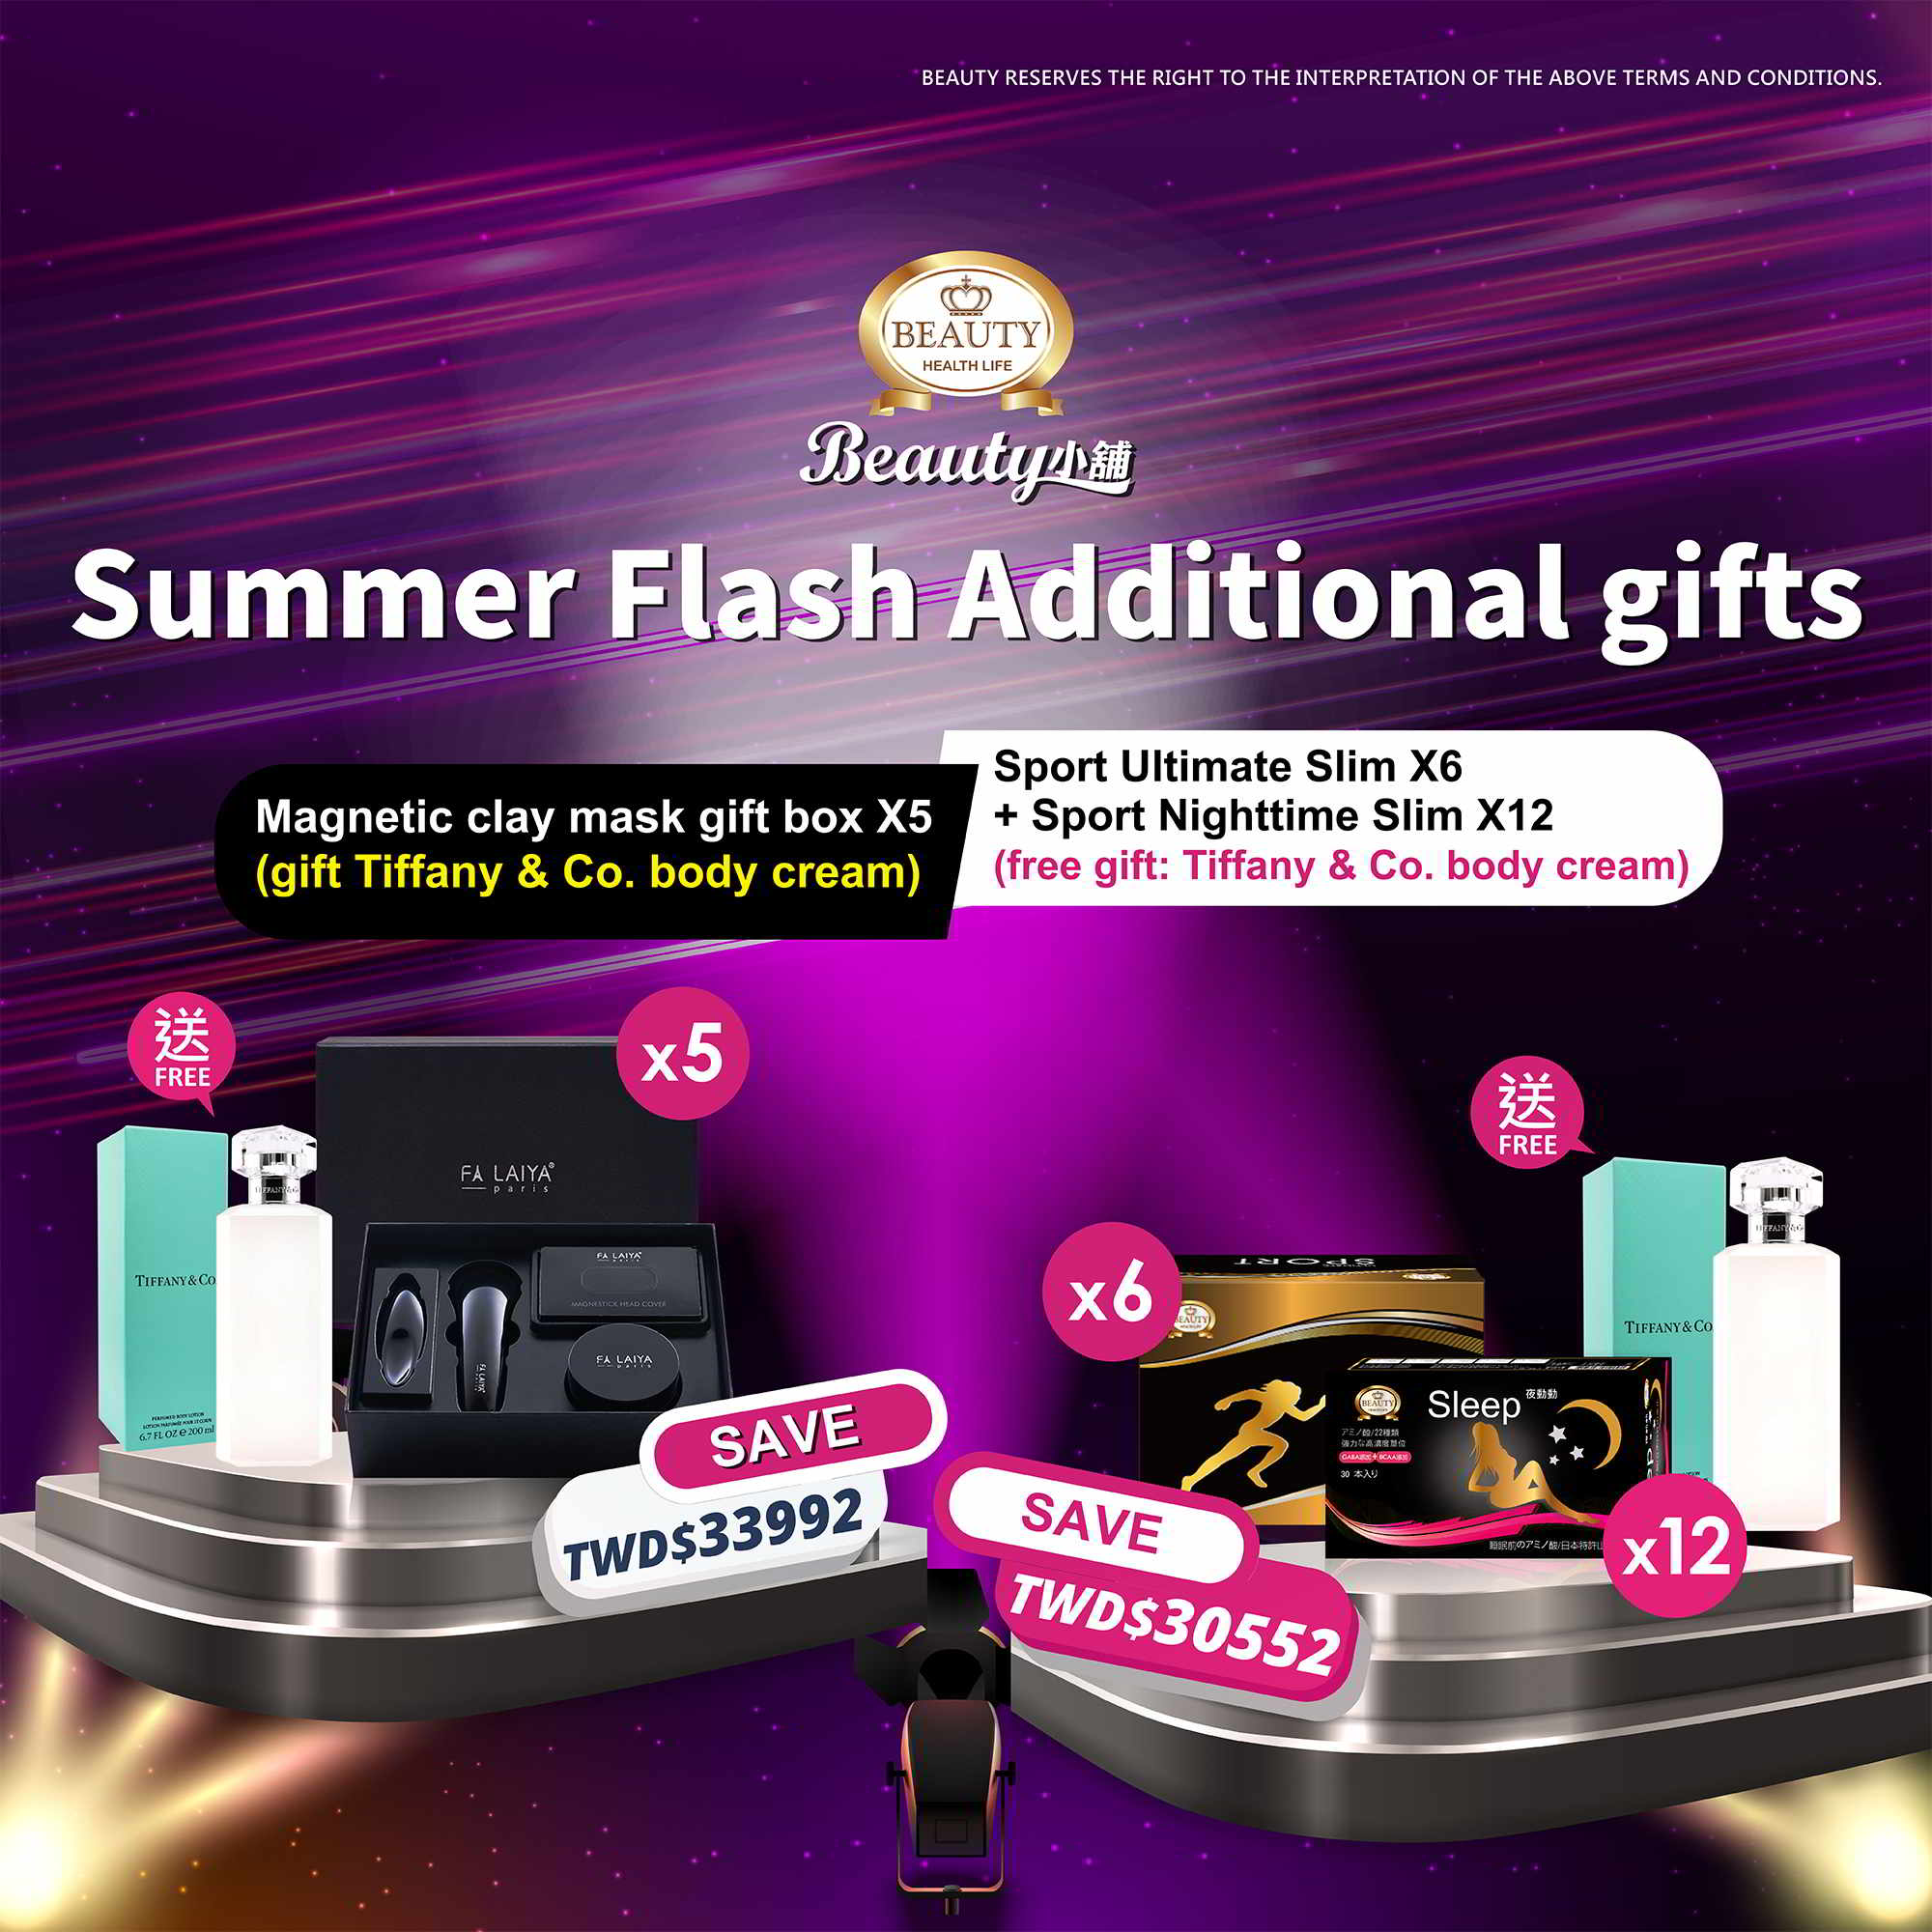 Summer Flash Additional gifts EDM.jpg